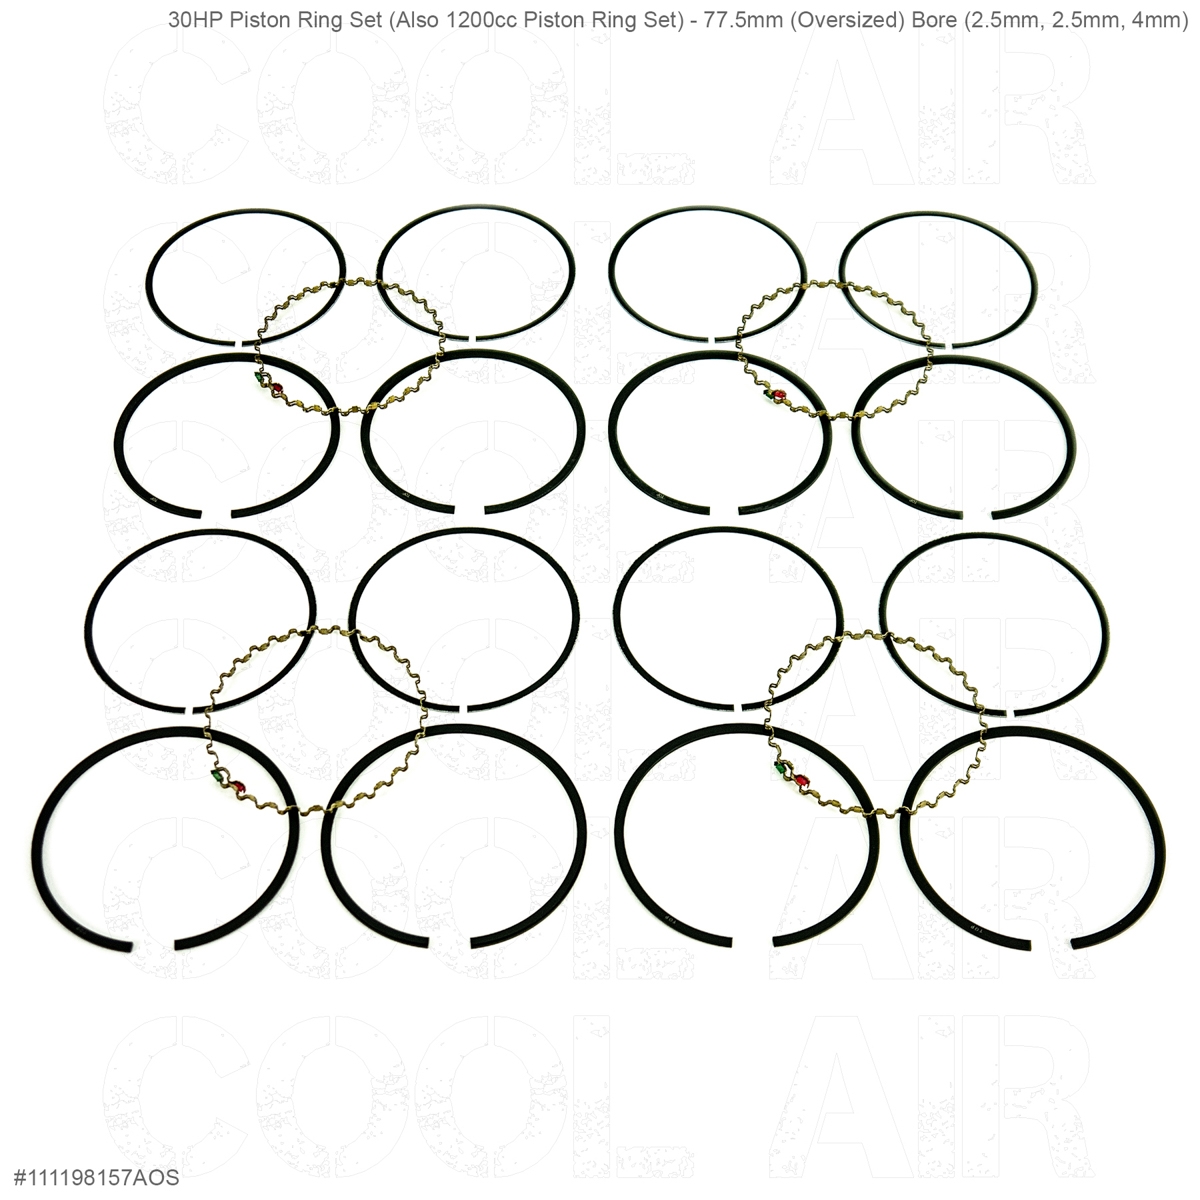 30HP Piston Ring Set (Also 1200cc Piston Ring Set) - 77.5mm (Oversized) Bore (2.5mm, 2.5mm, 4mm)